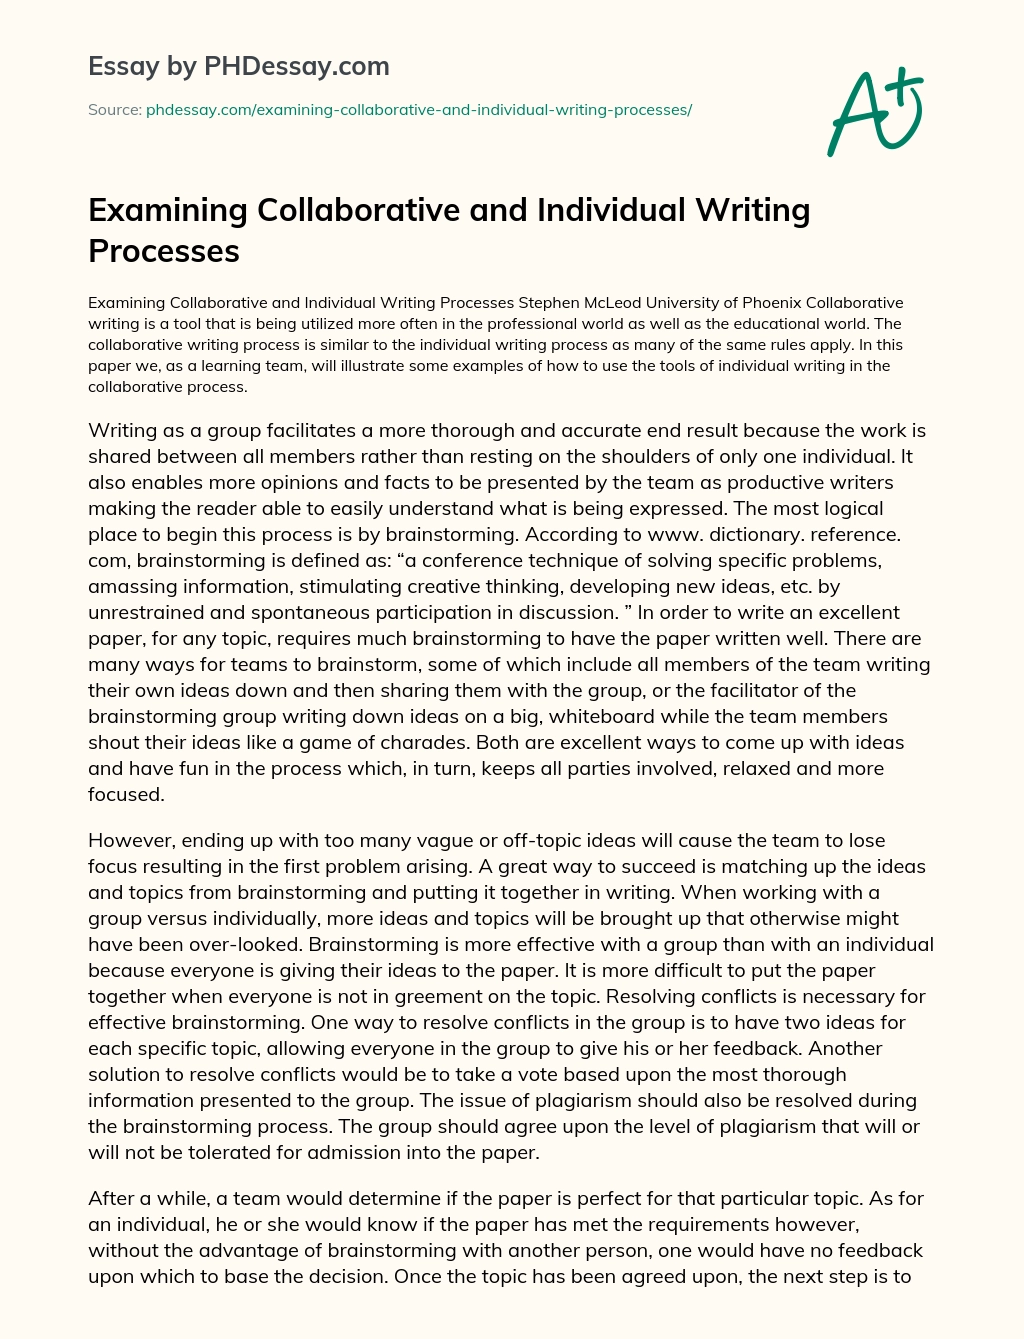 Examining Collaborative and Individual Writing Processes essay